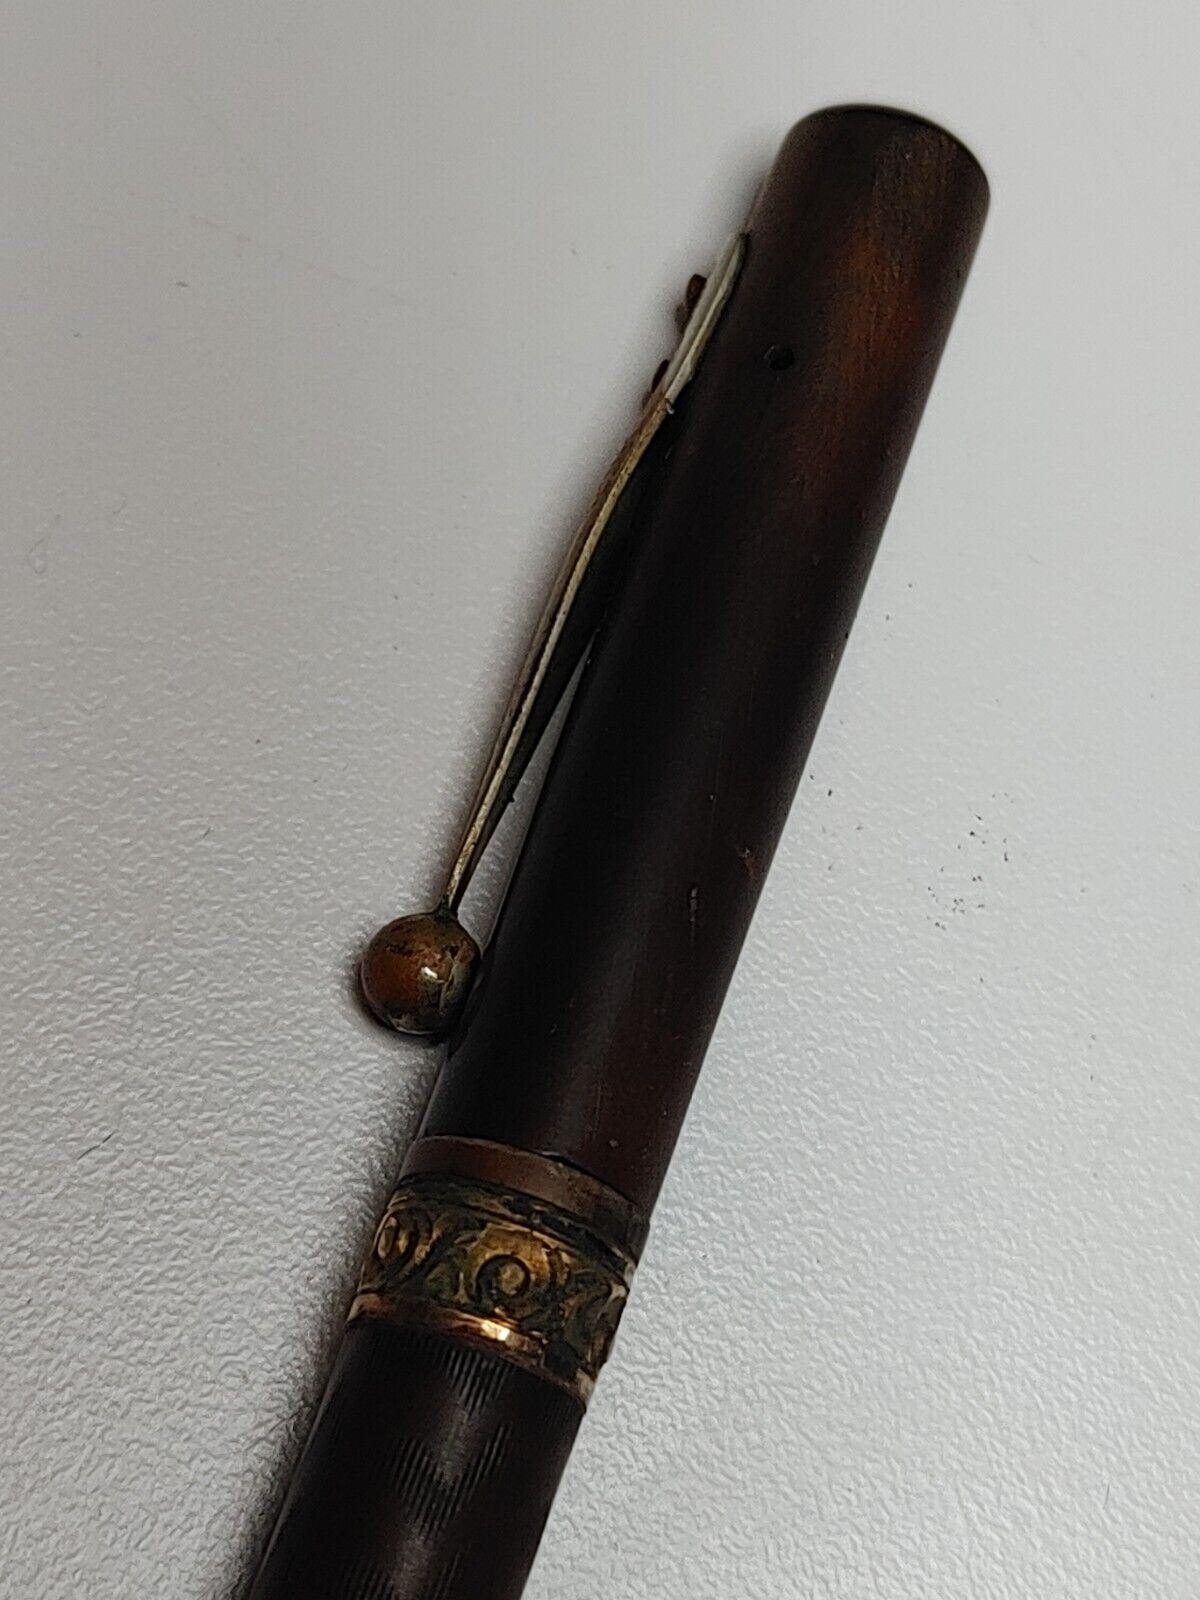 Antique Waterman Ideal Clip Cap Fountain Pen Brown Plastic, 1899 Patent Date